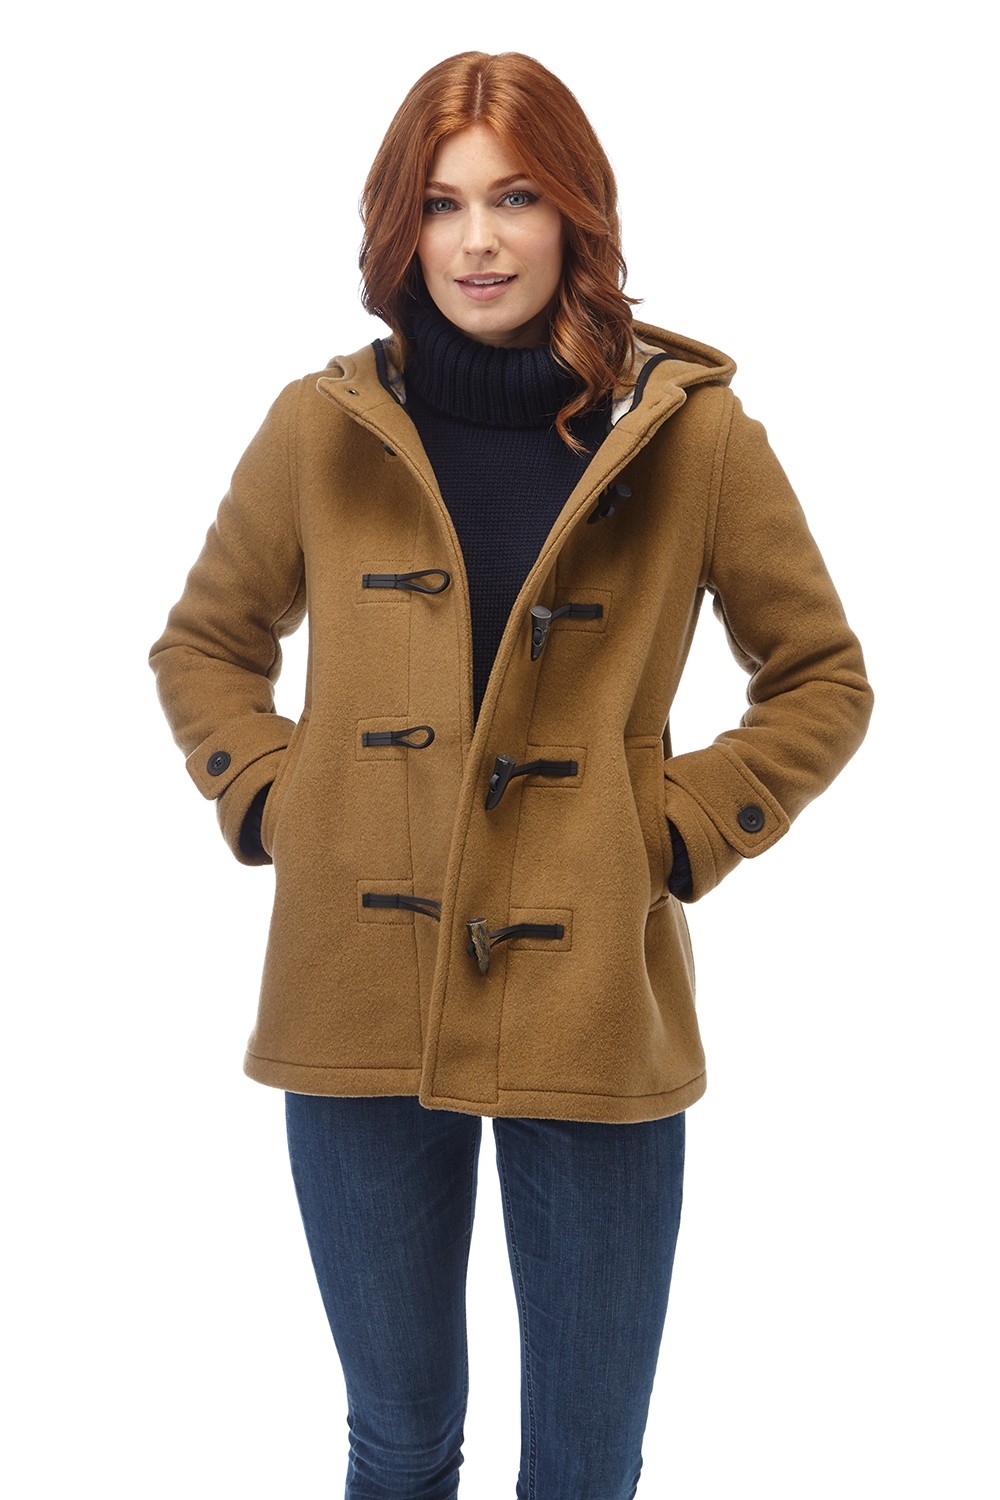 Ladies Laura Ashley Black Woollen Duffle Coat With Hood. - Etsy UK | Duffle  coat, Ashley black, Vintage jacket